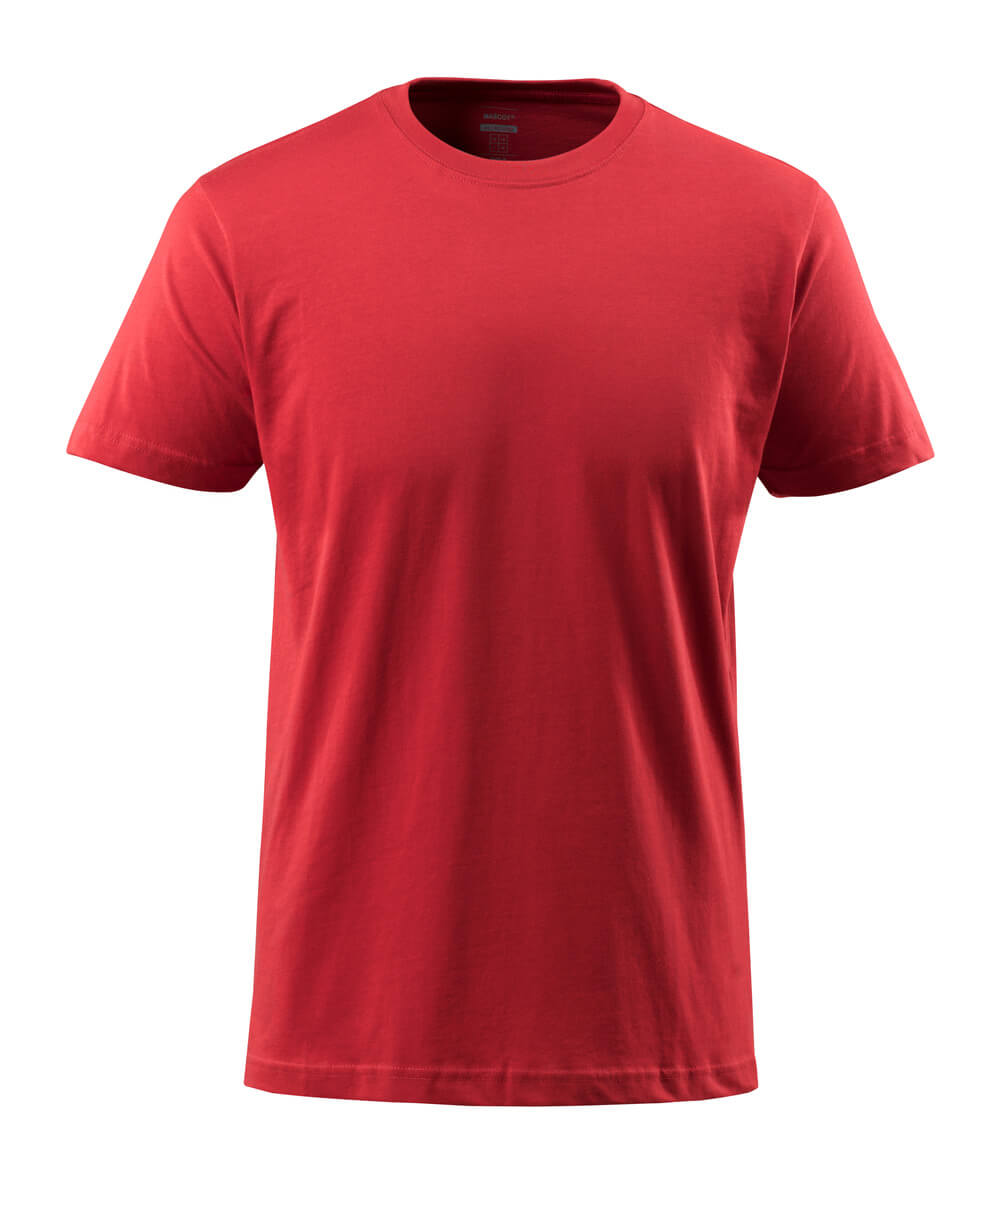 51579-965-02 T-skjorte - rød